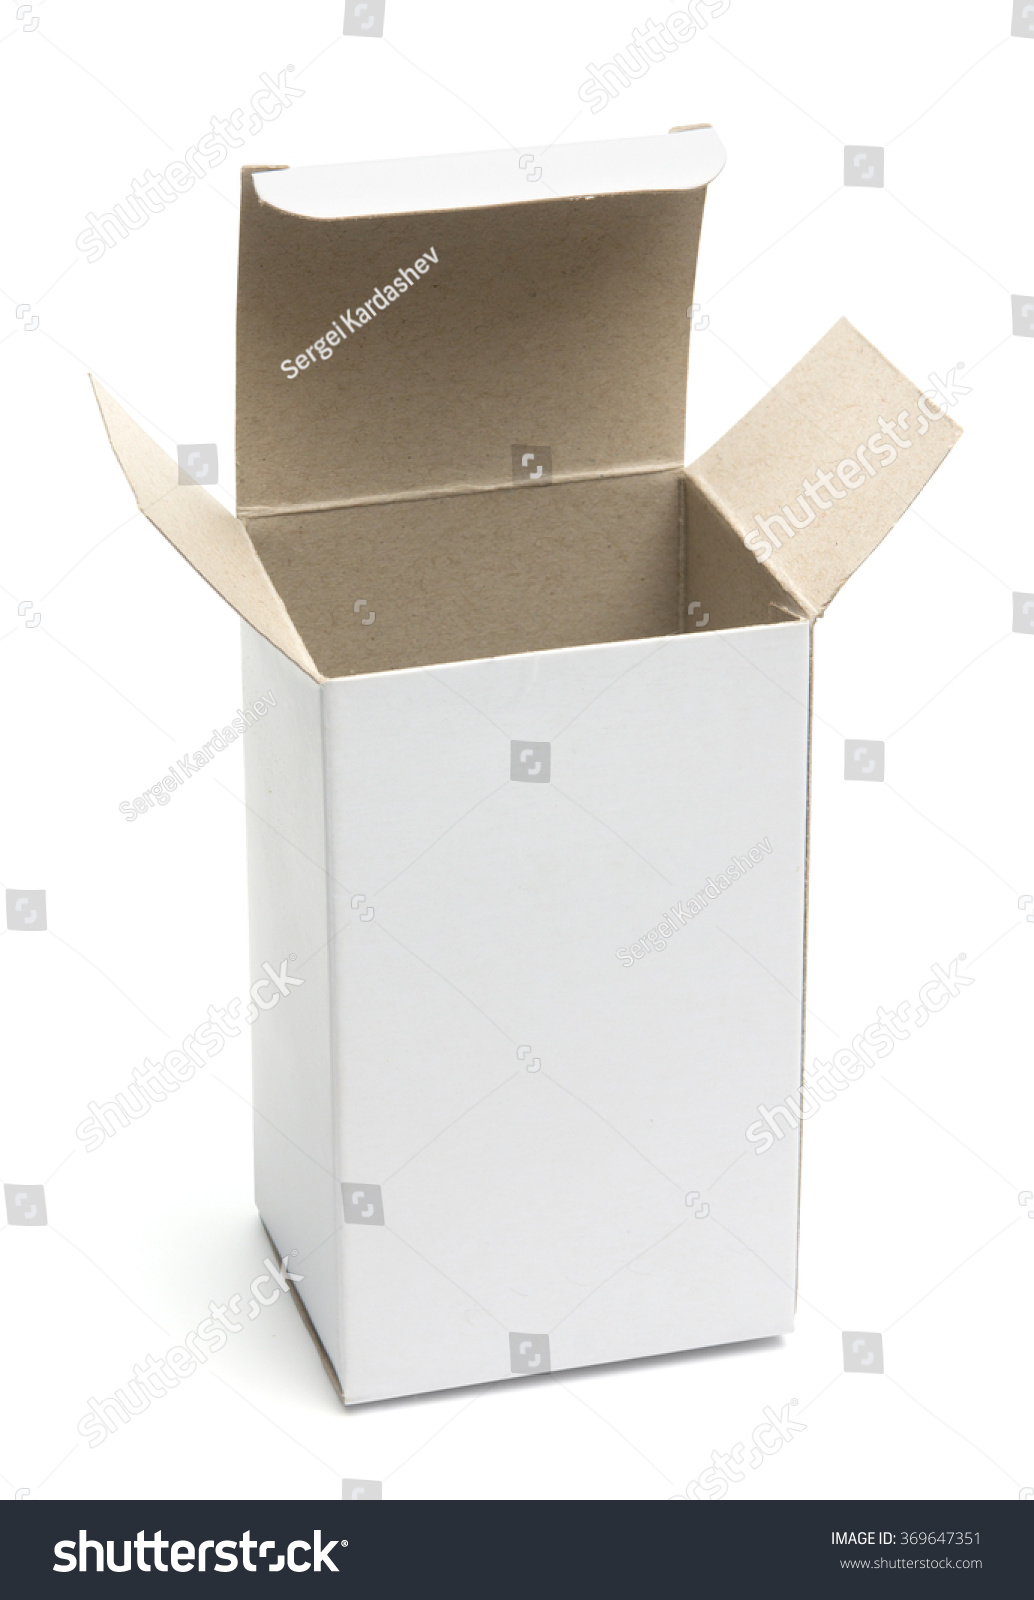 Download Mockup Vertical White Cardboard Box Photo Stock Photo ...